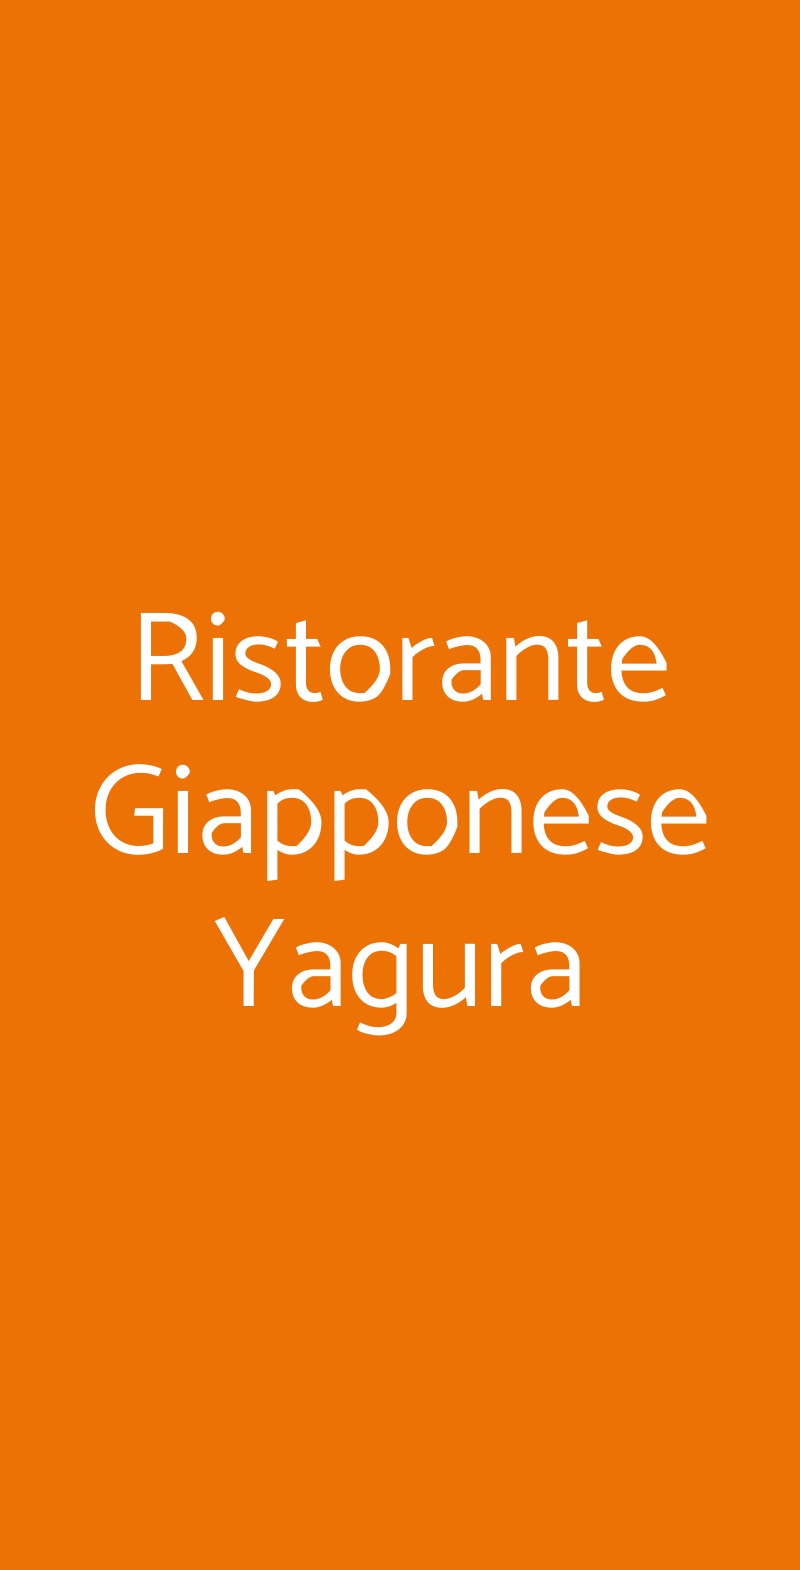 Ristorante Giapponese Yagura Firenze menù 1 pagina